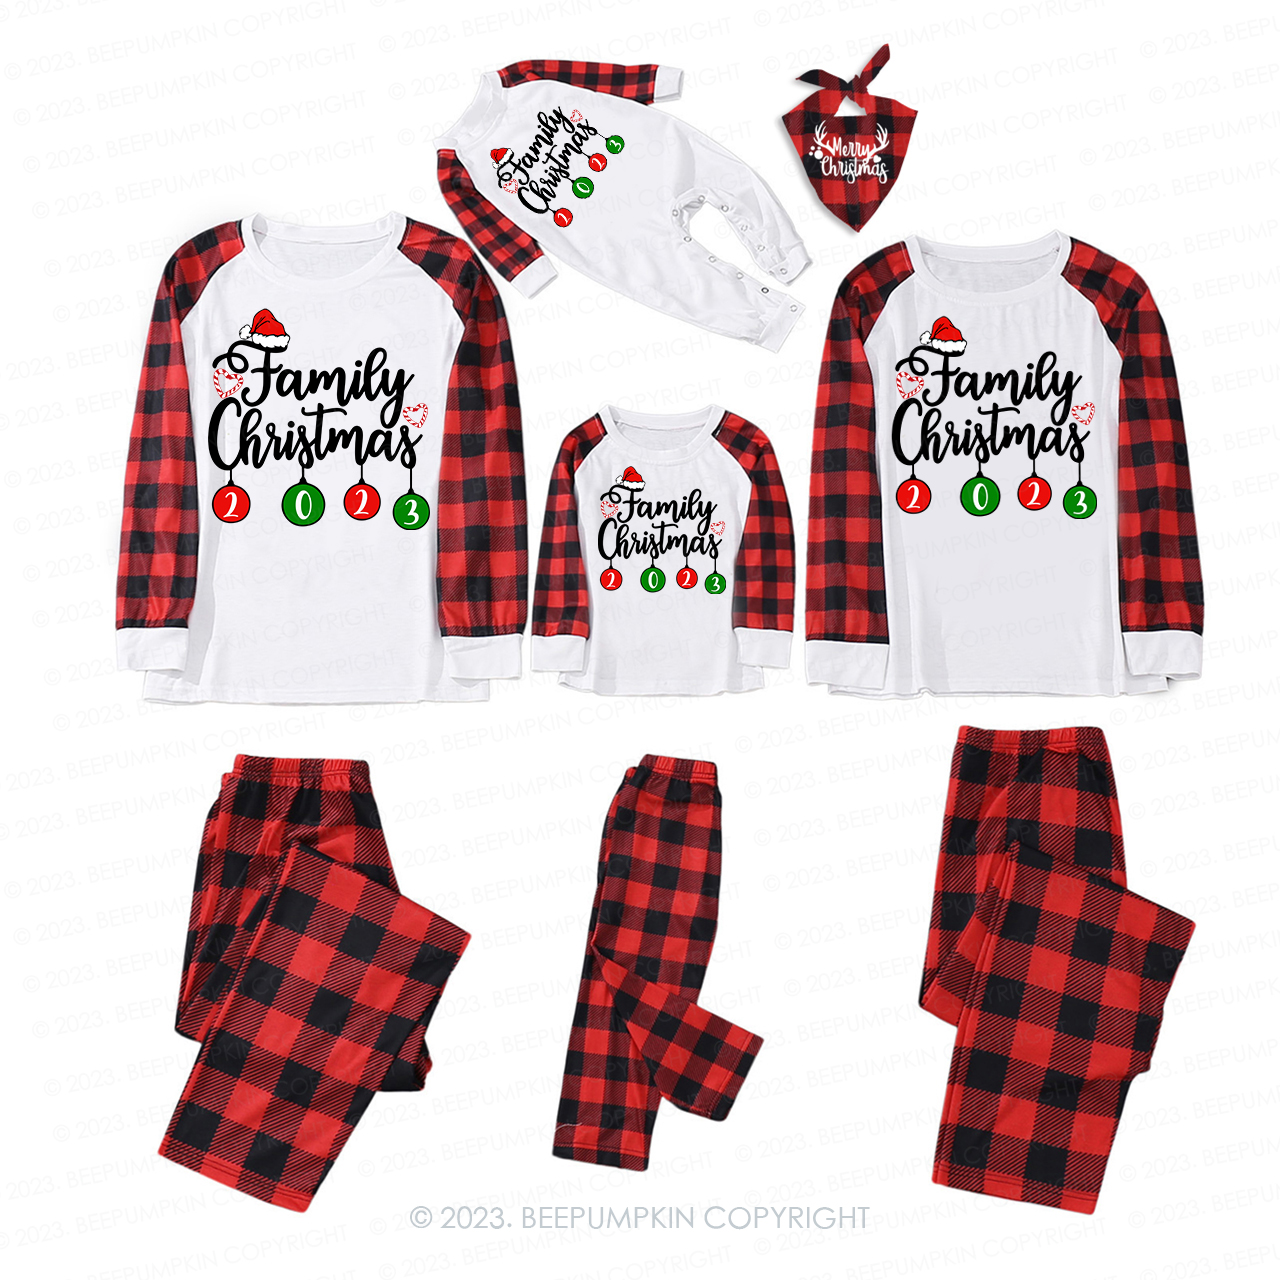 Family Christmas 2023 Lanterns Matching Pajamas For Family Beepumpkin